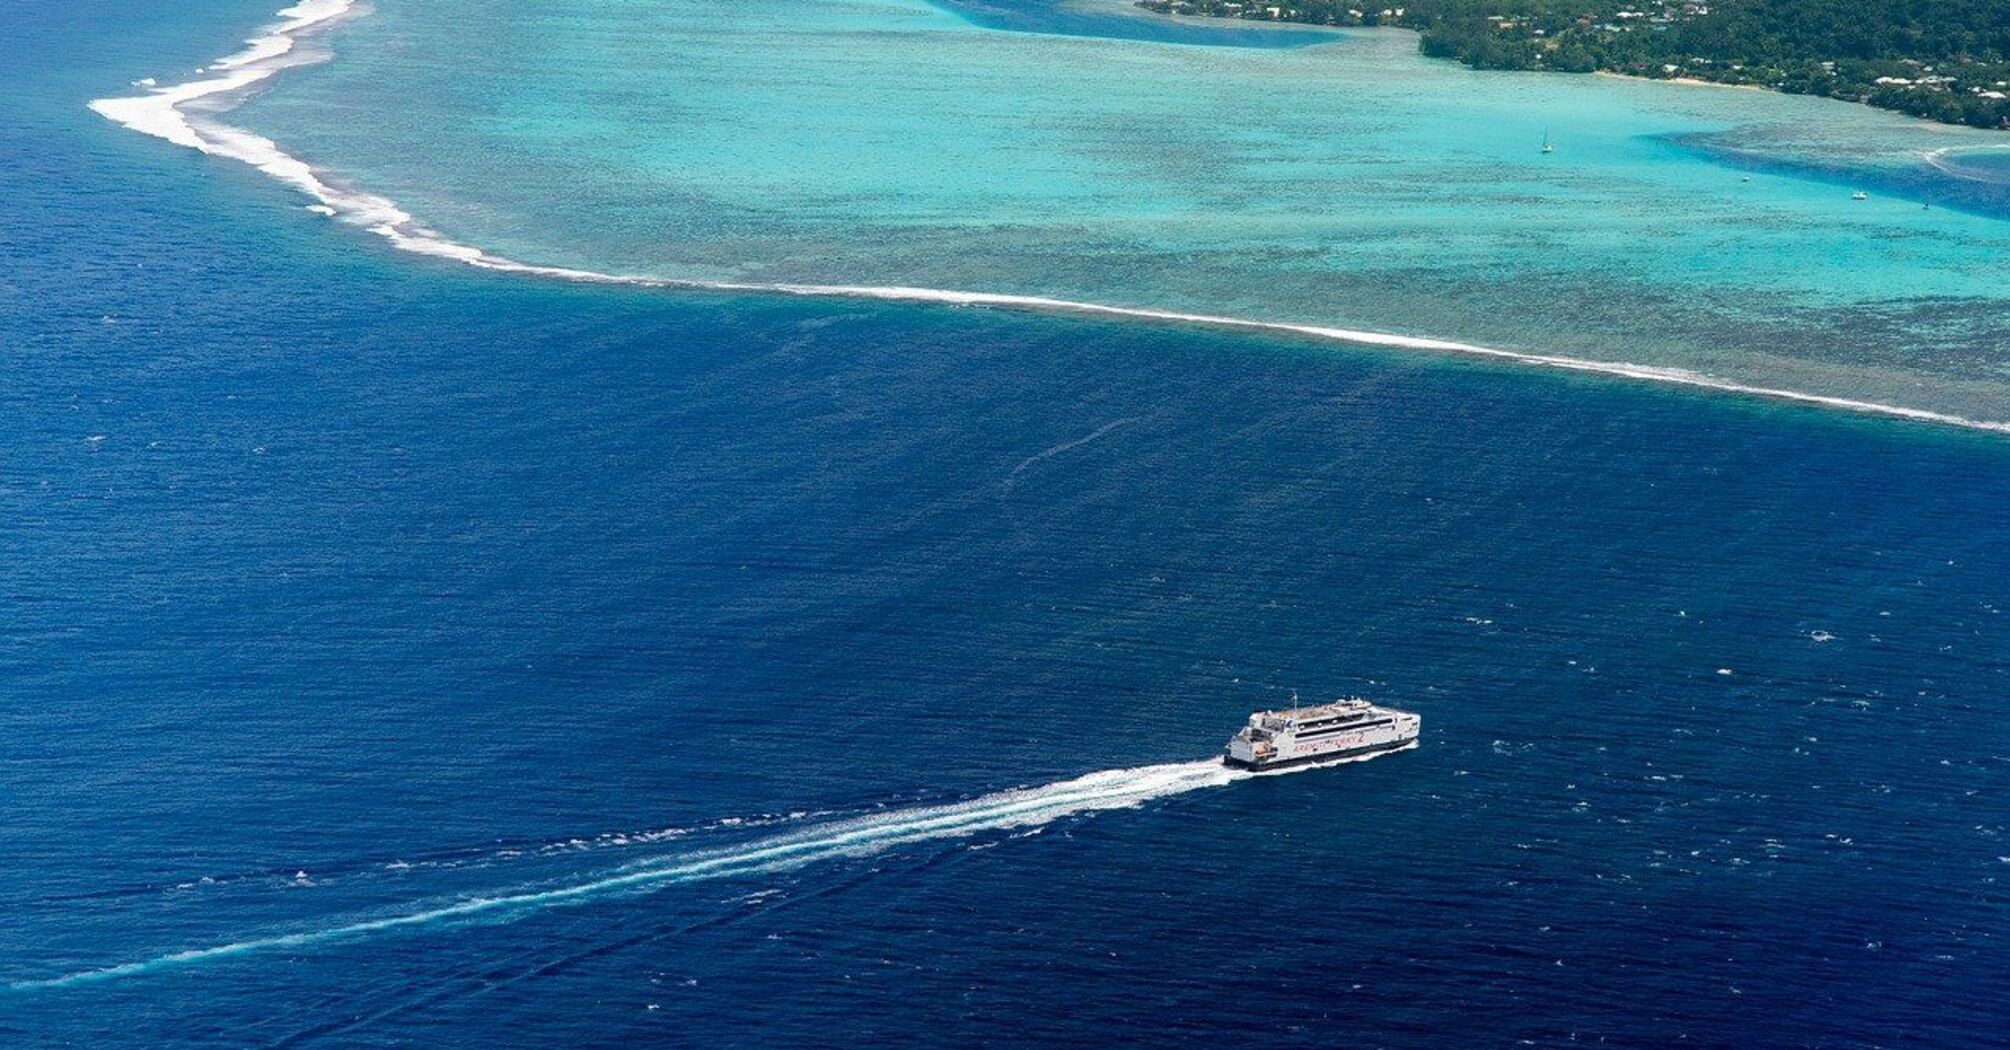 Mass cruise tourism in French Polynesia: Profit vs. ecology